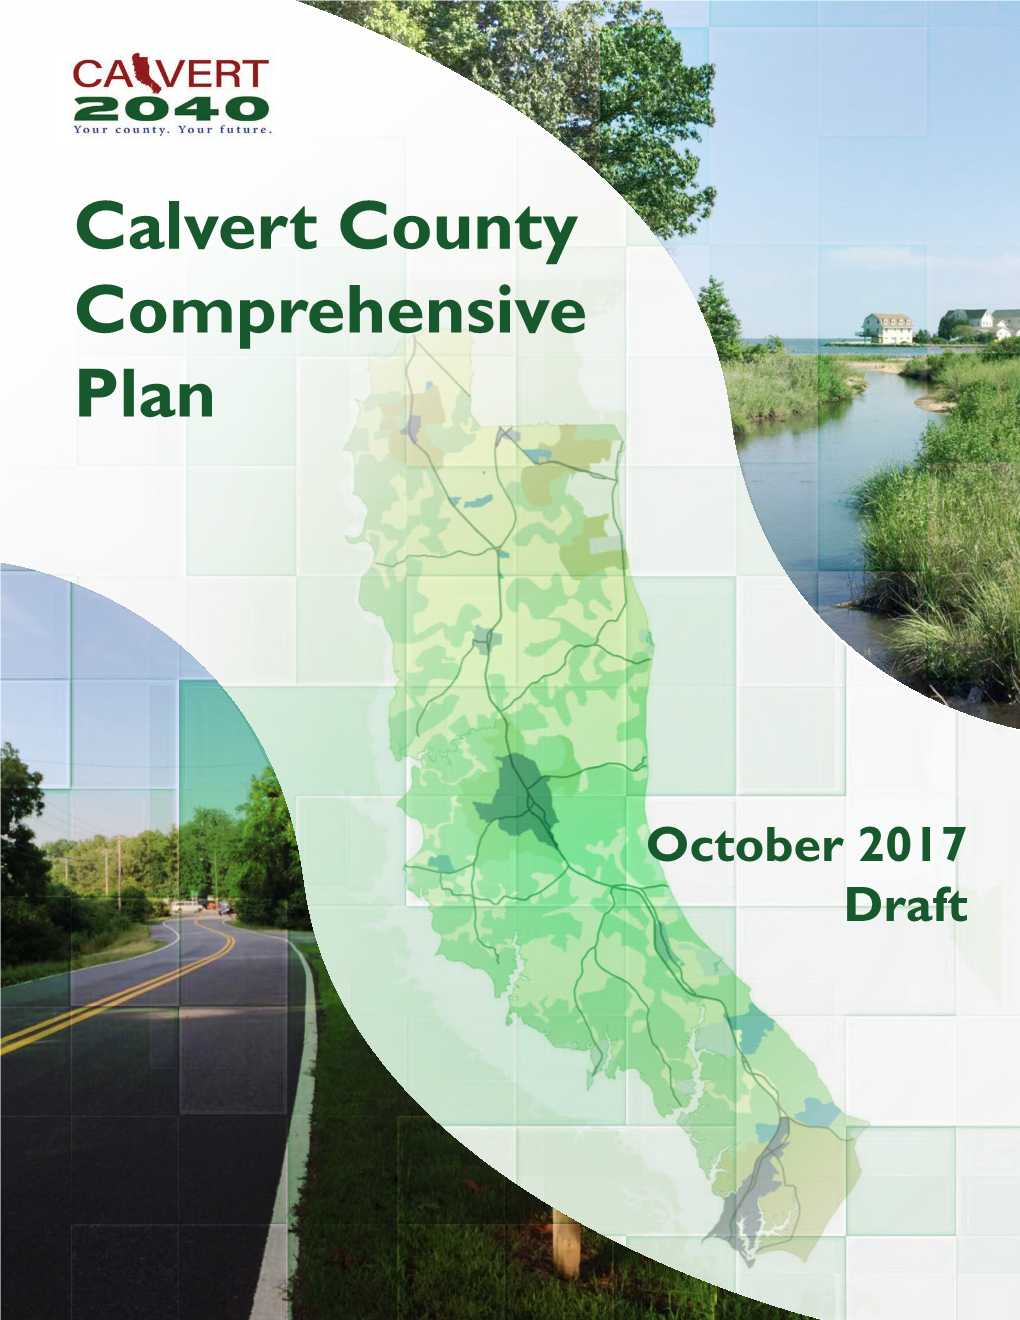 Calvert County Comprehensive Plan (October 2017 Draft)